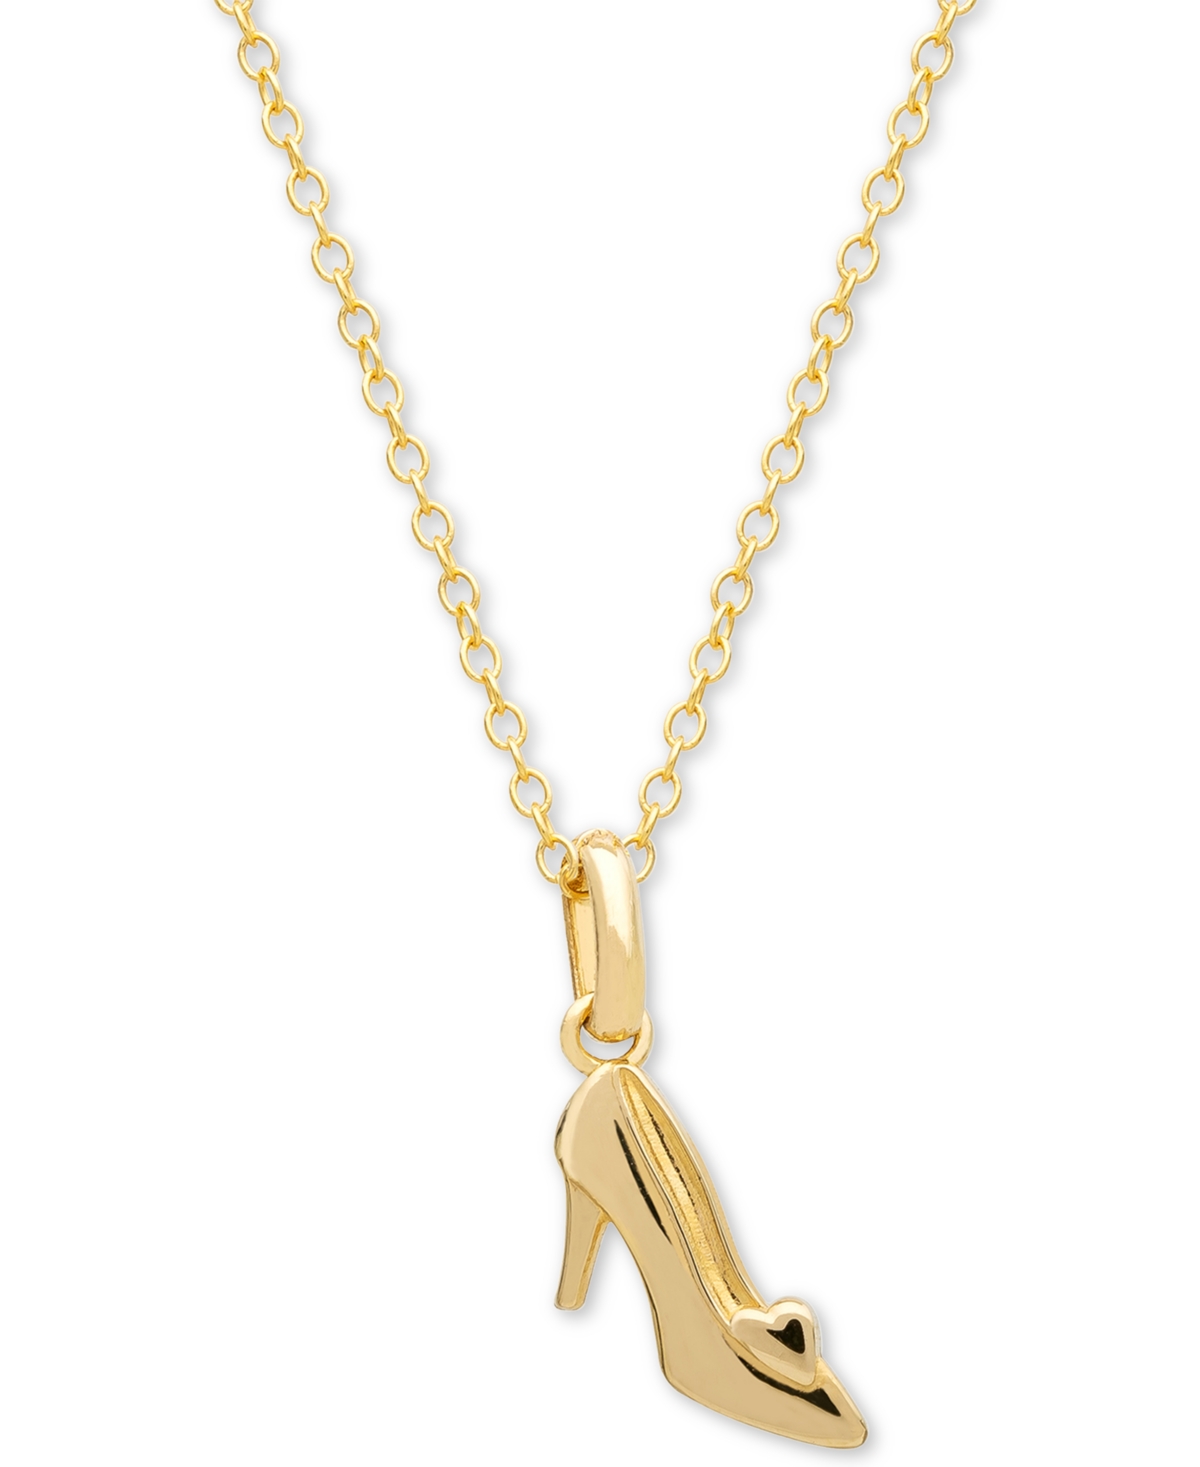 Children's Cinderella Slipper 15" Pendant Necklace in 14k Gold - Yellow Gold